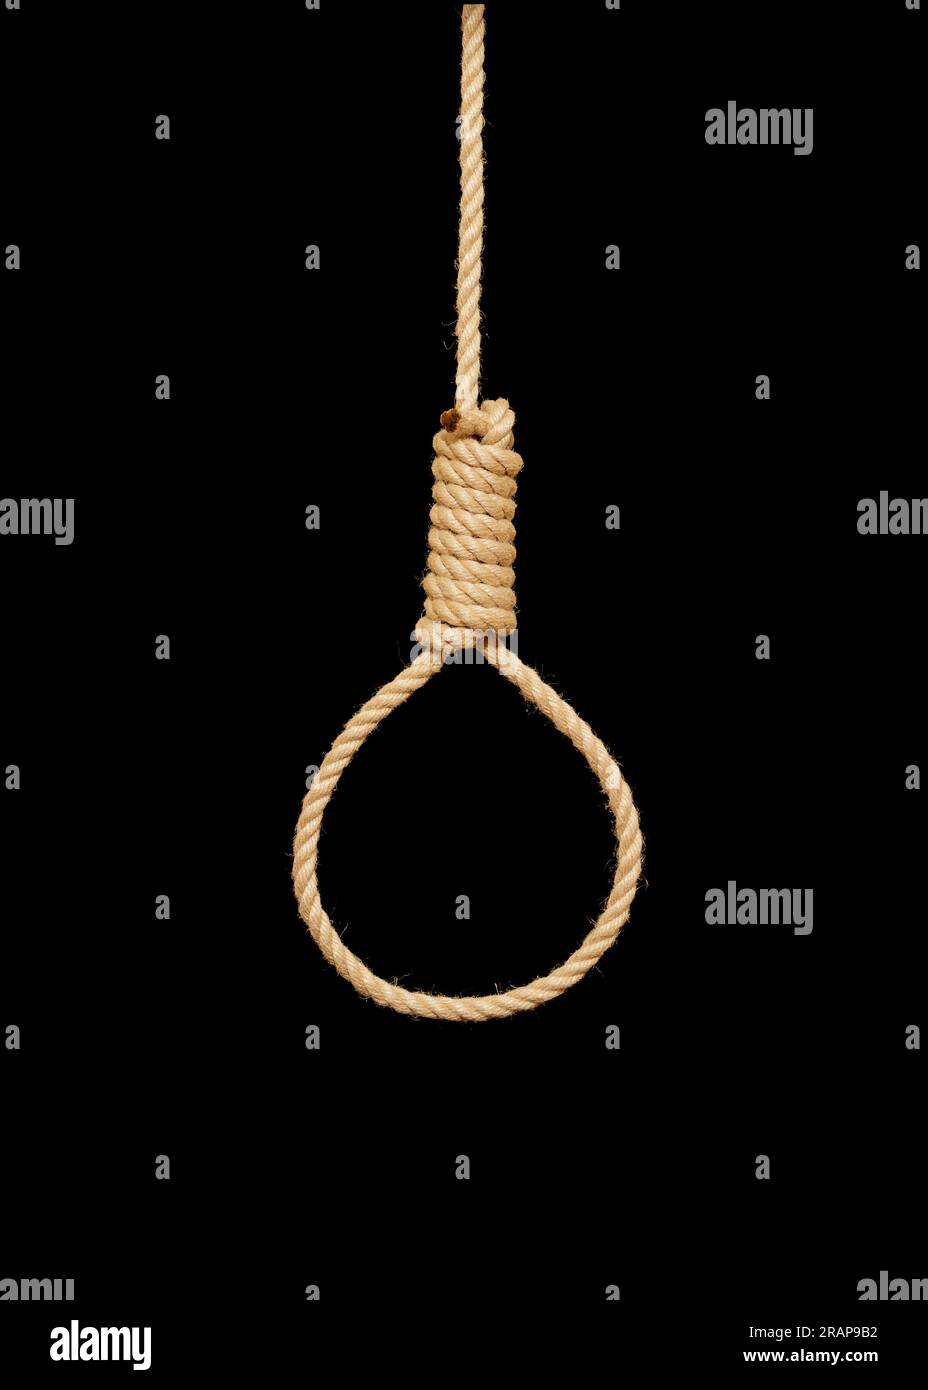 Noose, hanging rope on black background. Stock Photo